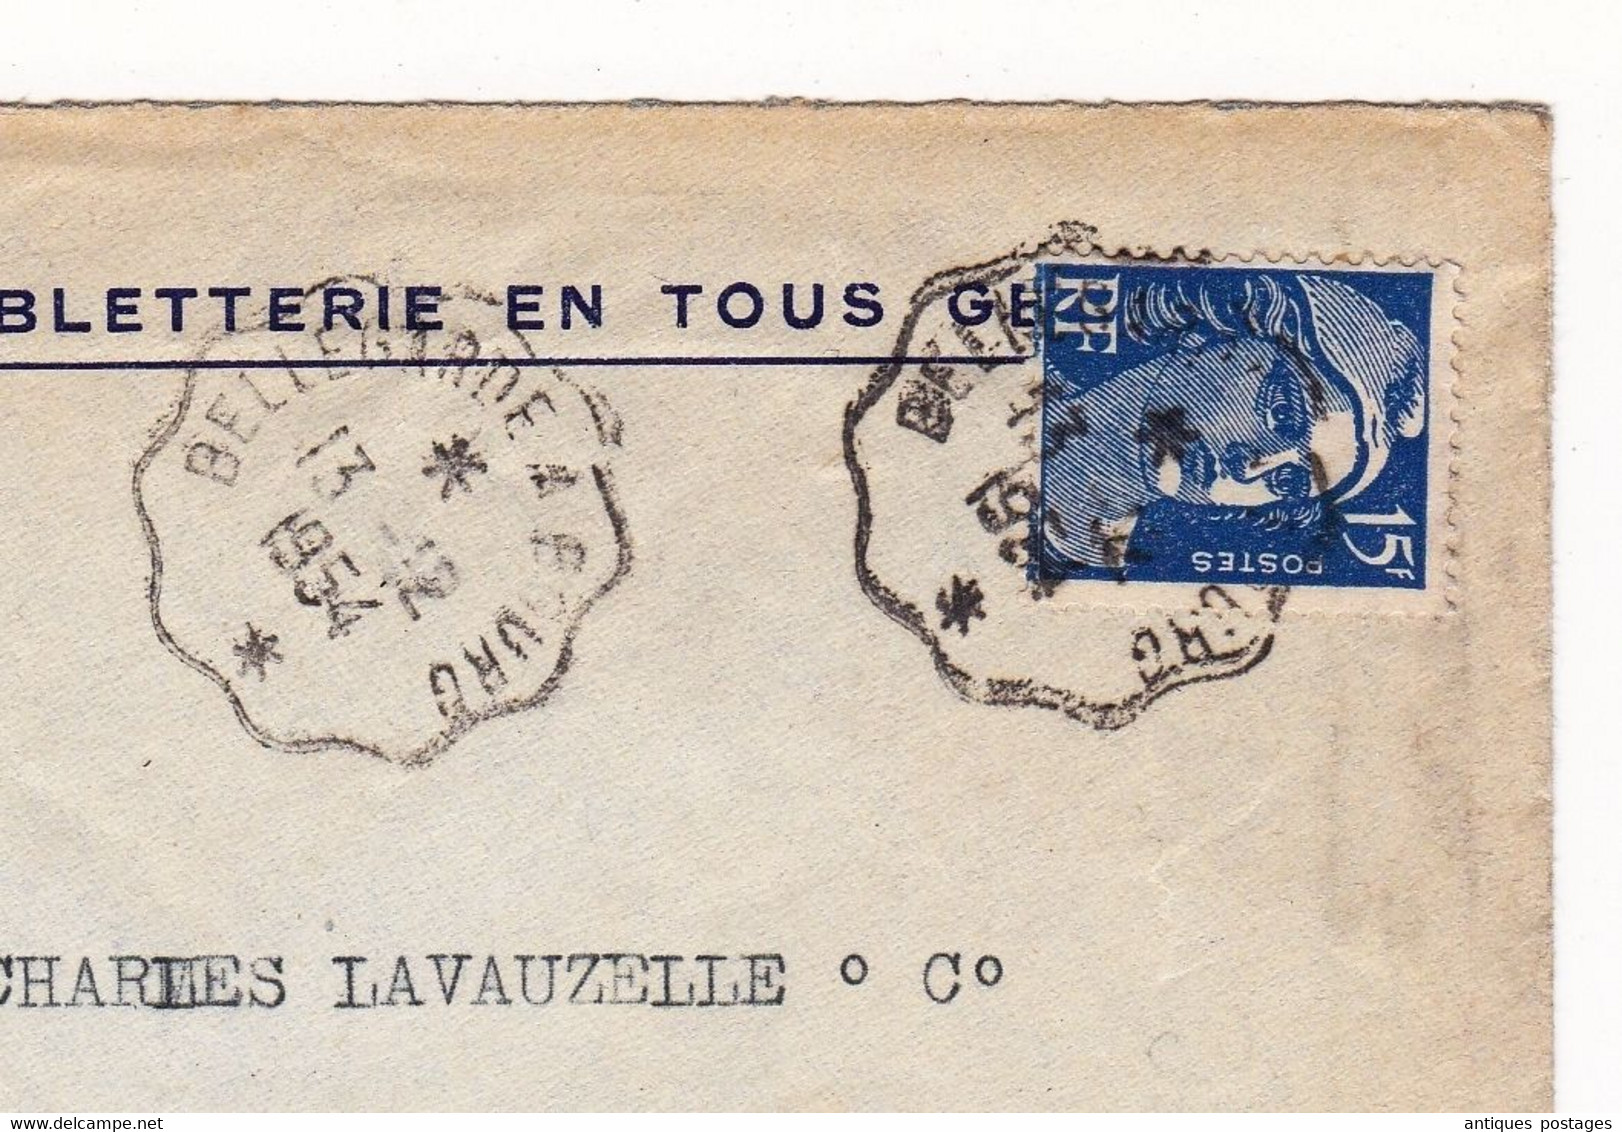 Les Neyrolles Ain 1954 Henri Dupuis Tournerie Tabletterie Cachet Convoyeur Bellegarde à Bourg En Bresse Mariane Gandon - 1945-54 Marianne (Gandon)